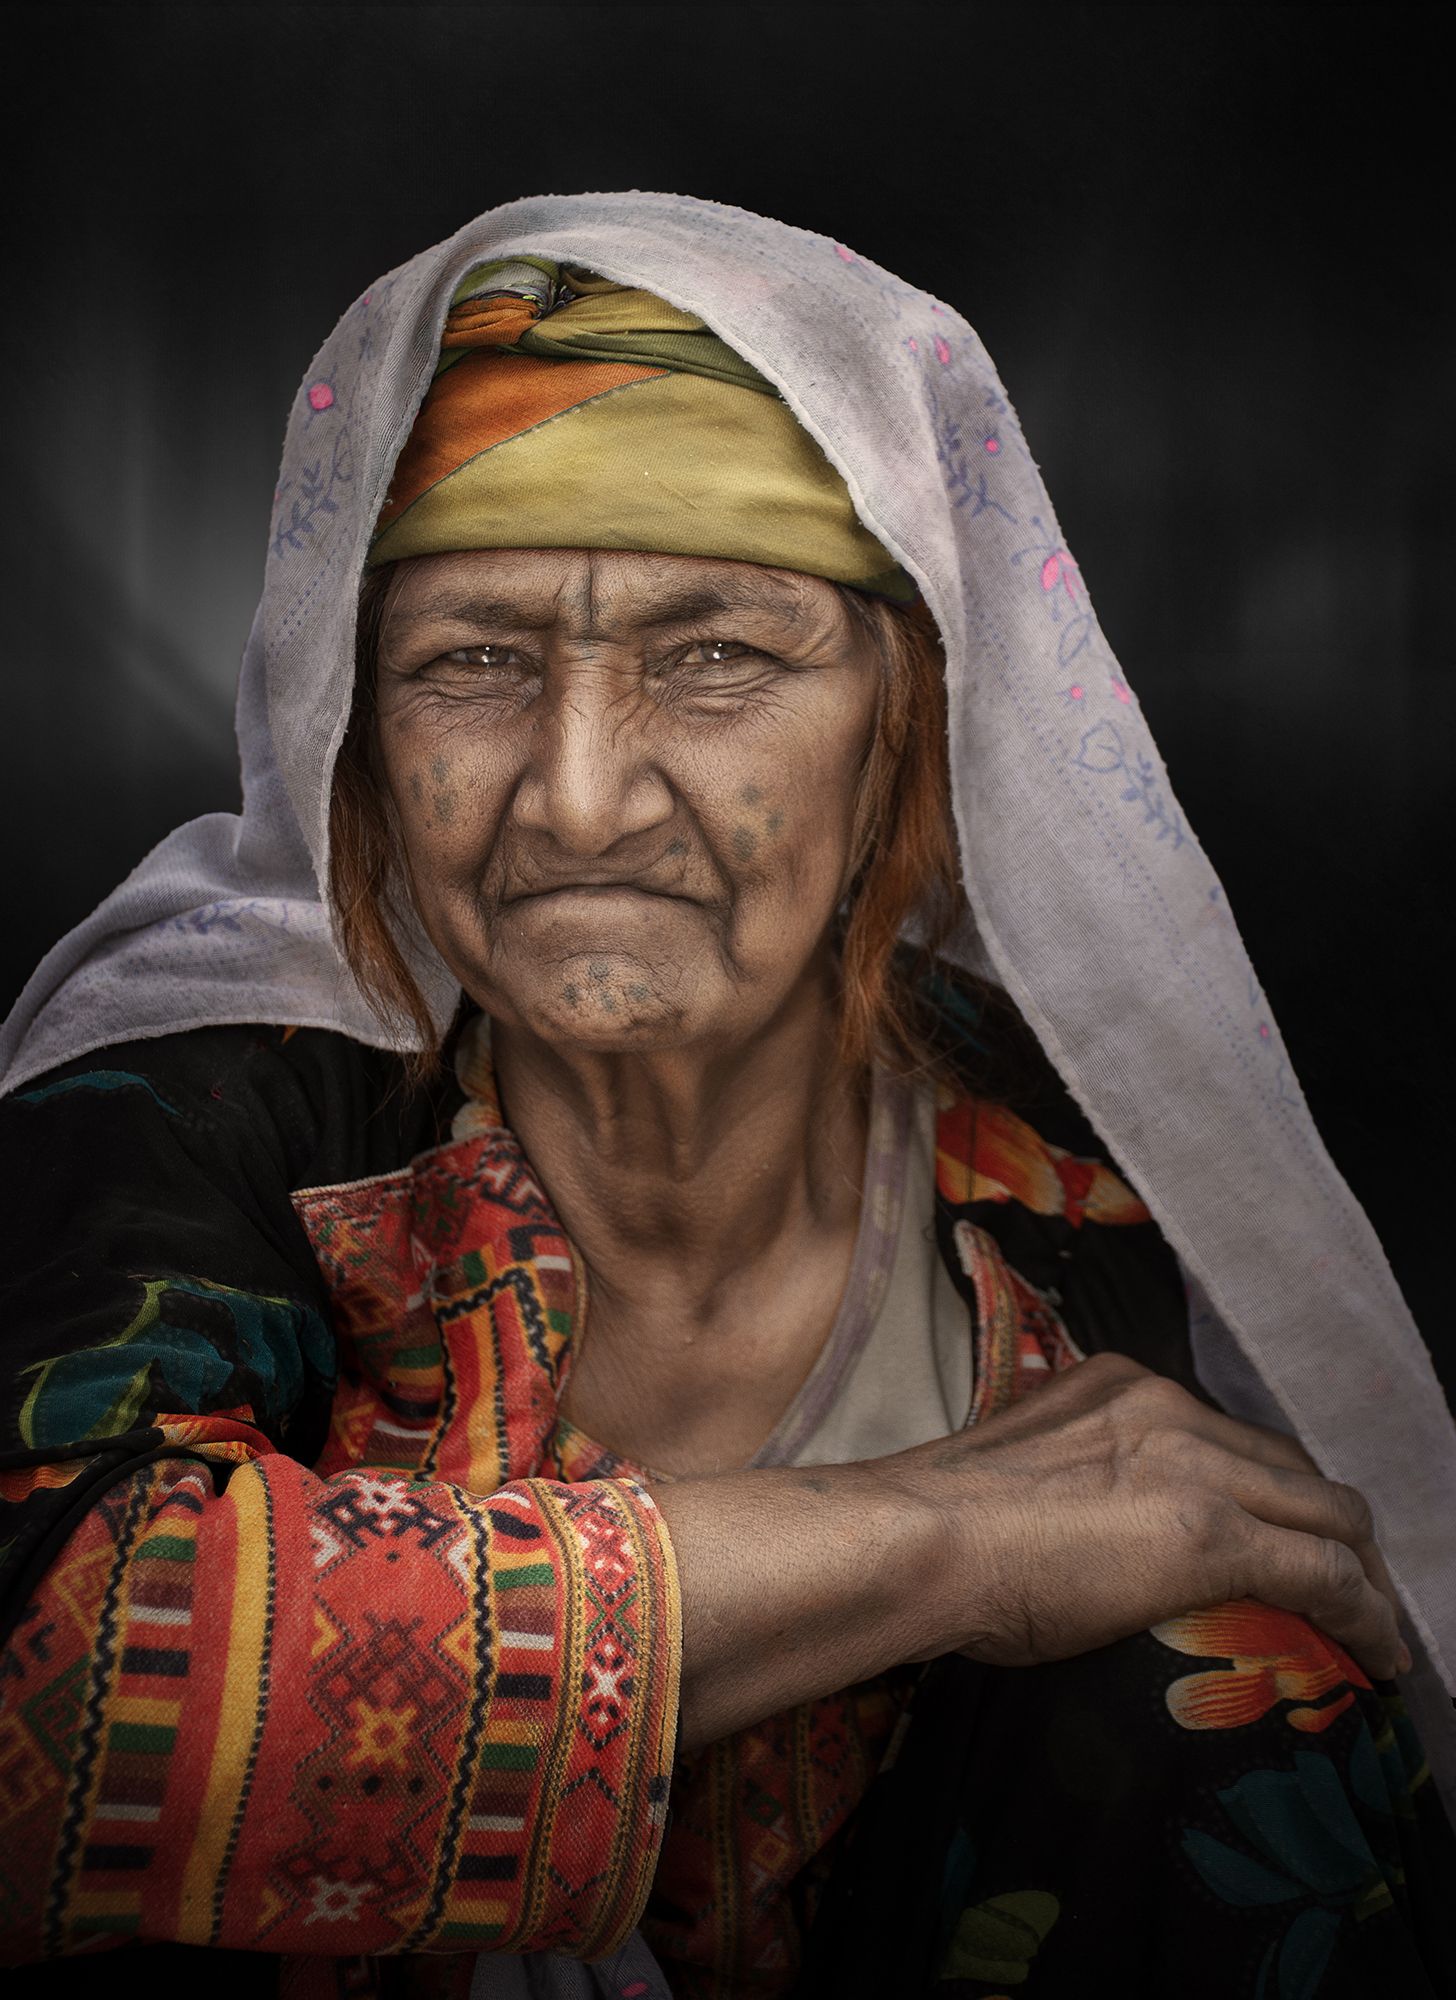 #portrait #people #Gypsy #turban #face #human, Mehdi Zavvar